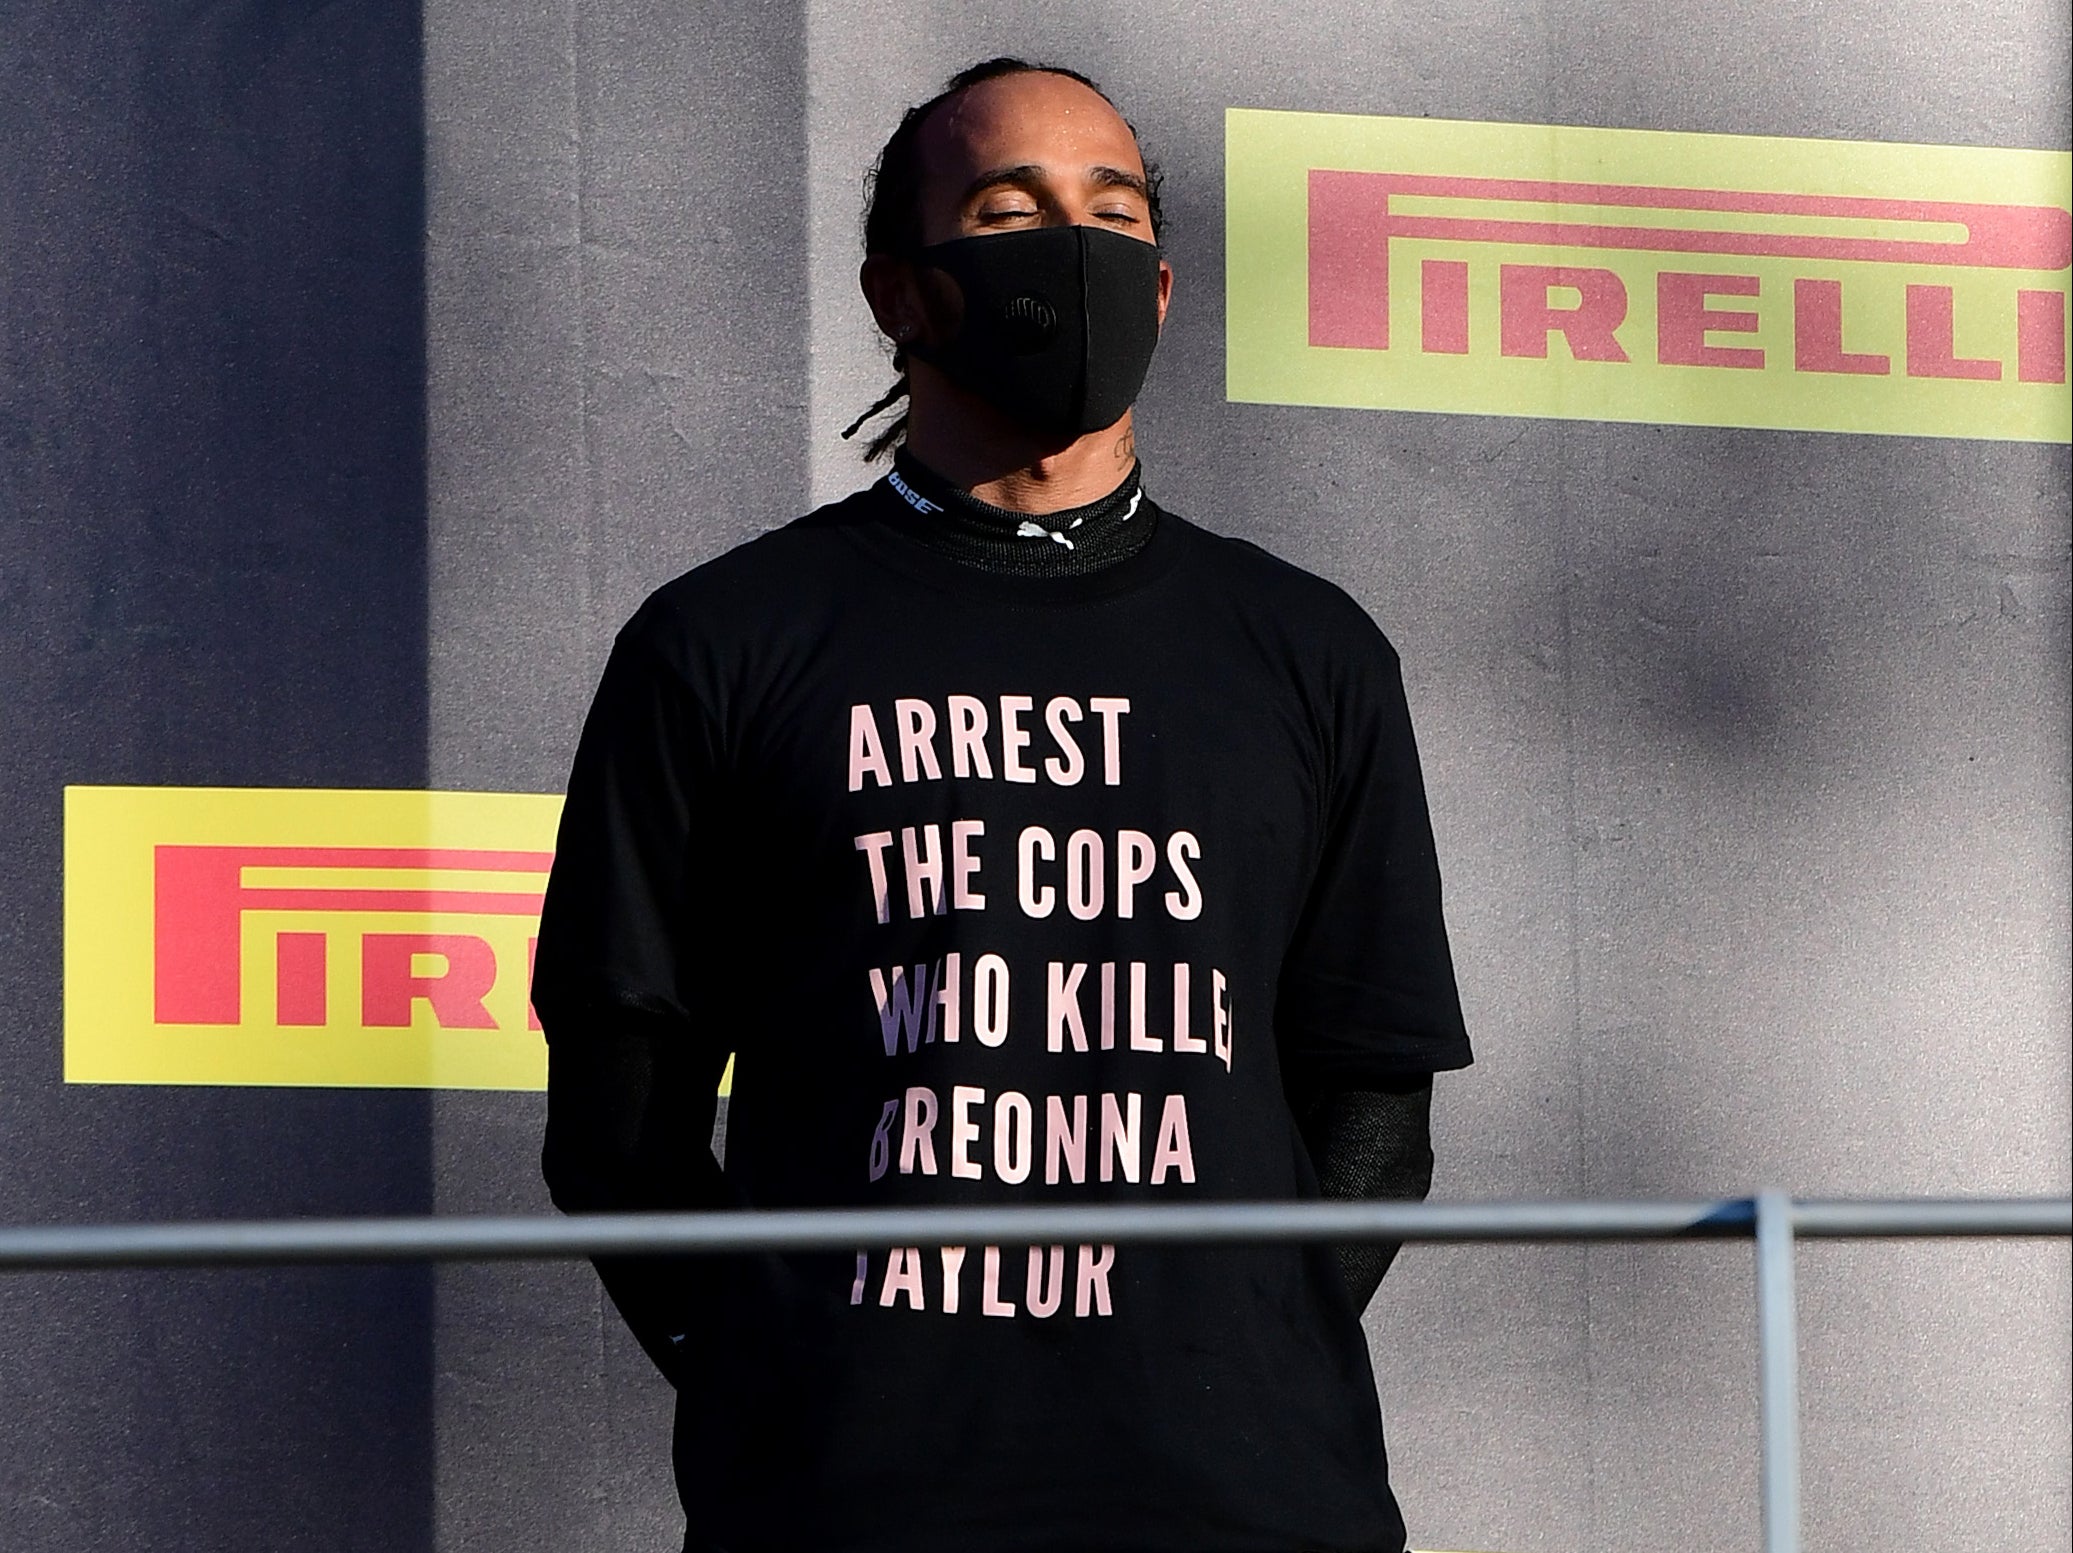 Lewis Hamilton sporting the anti-racism T-shirt on the Mugello podium